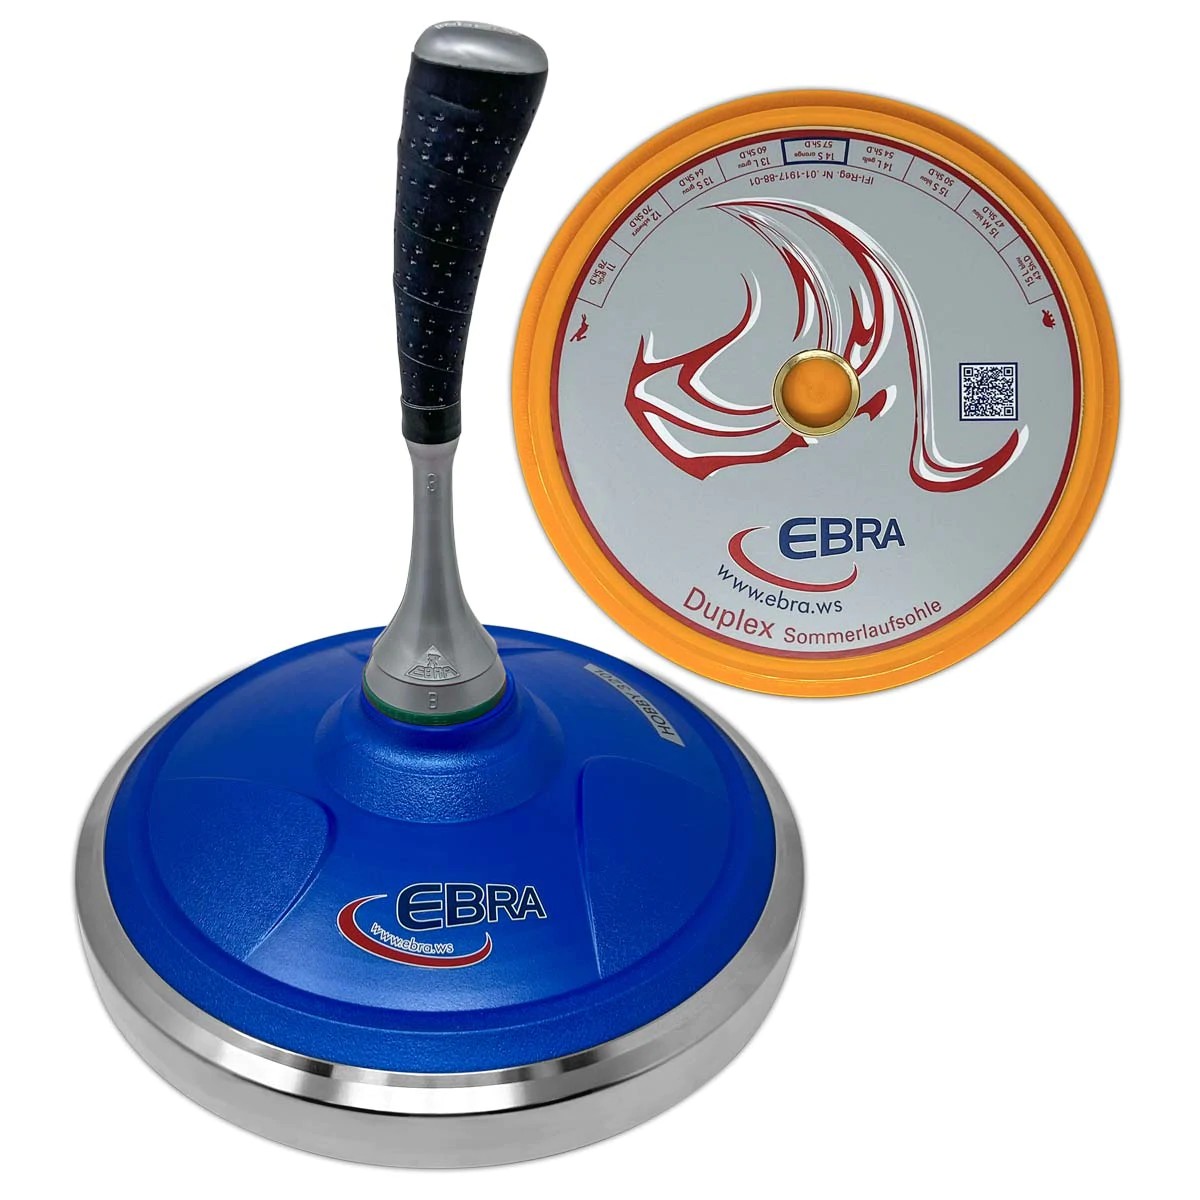 EBRA Eisstock Profil-Duplex Sommerlaufsohle gelb 14 L 